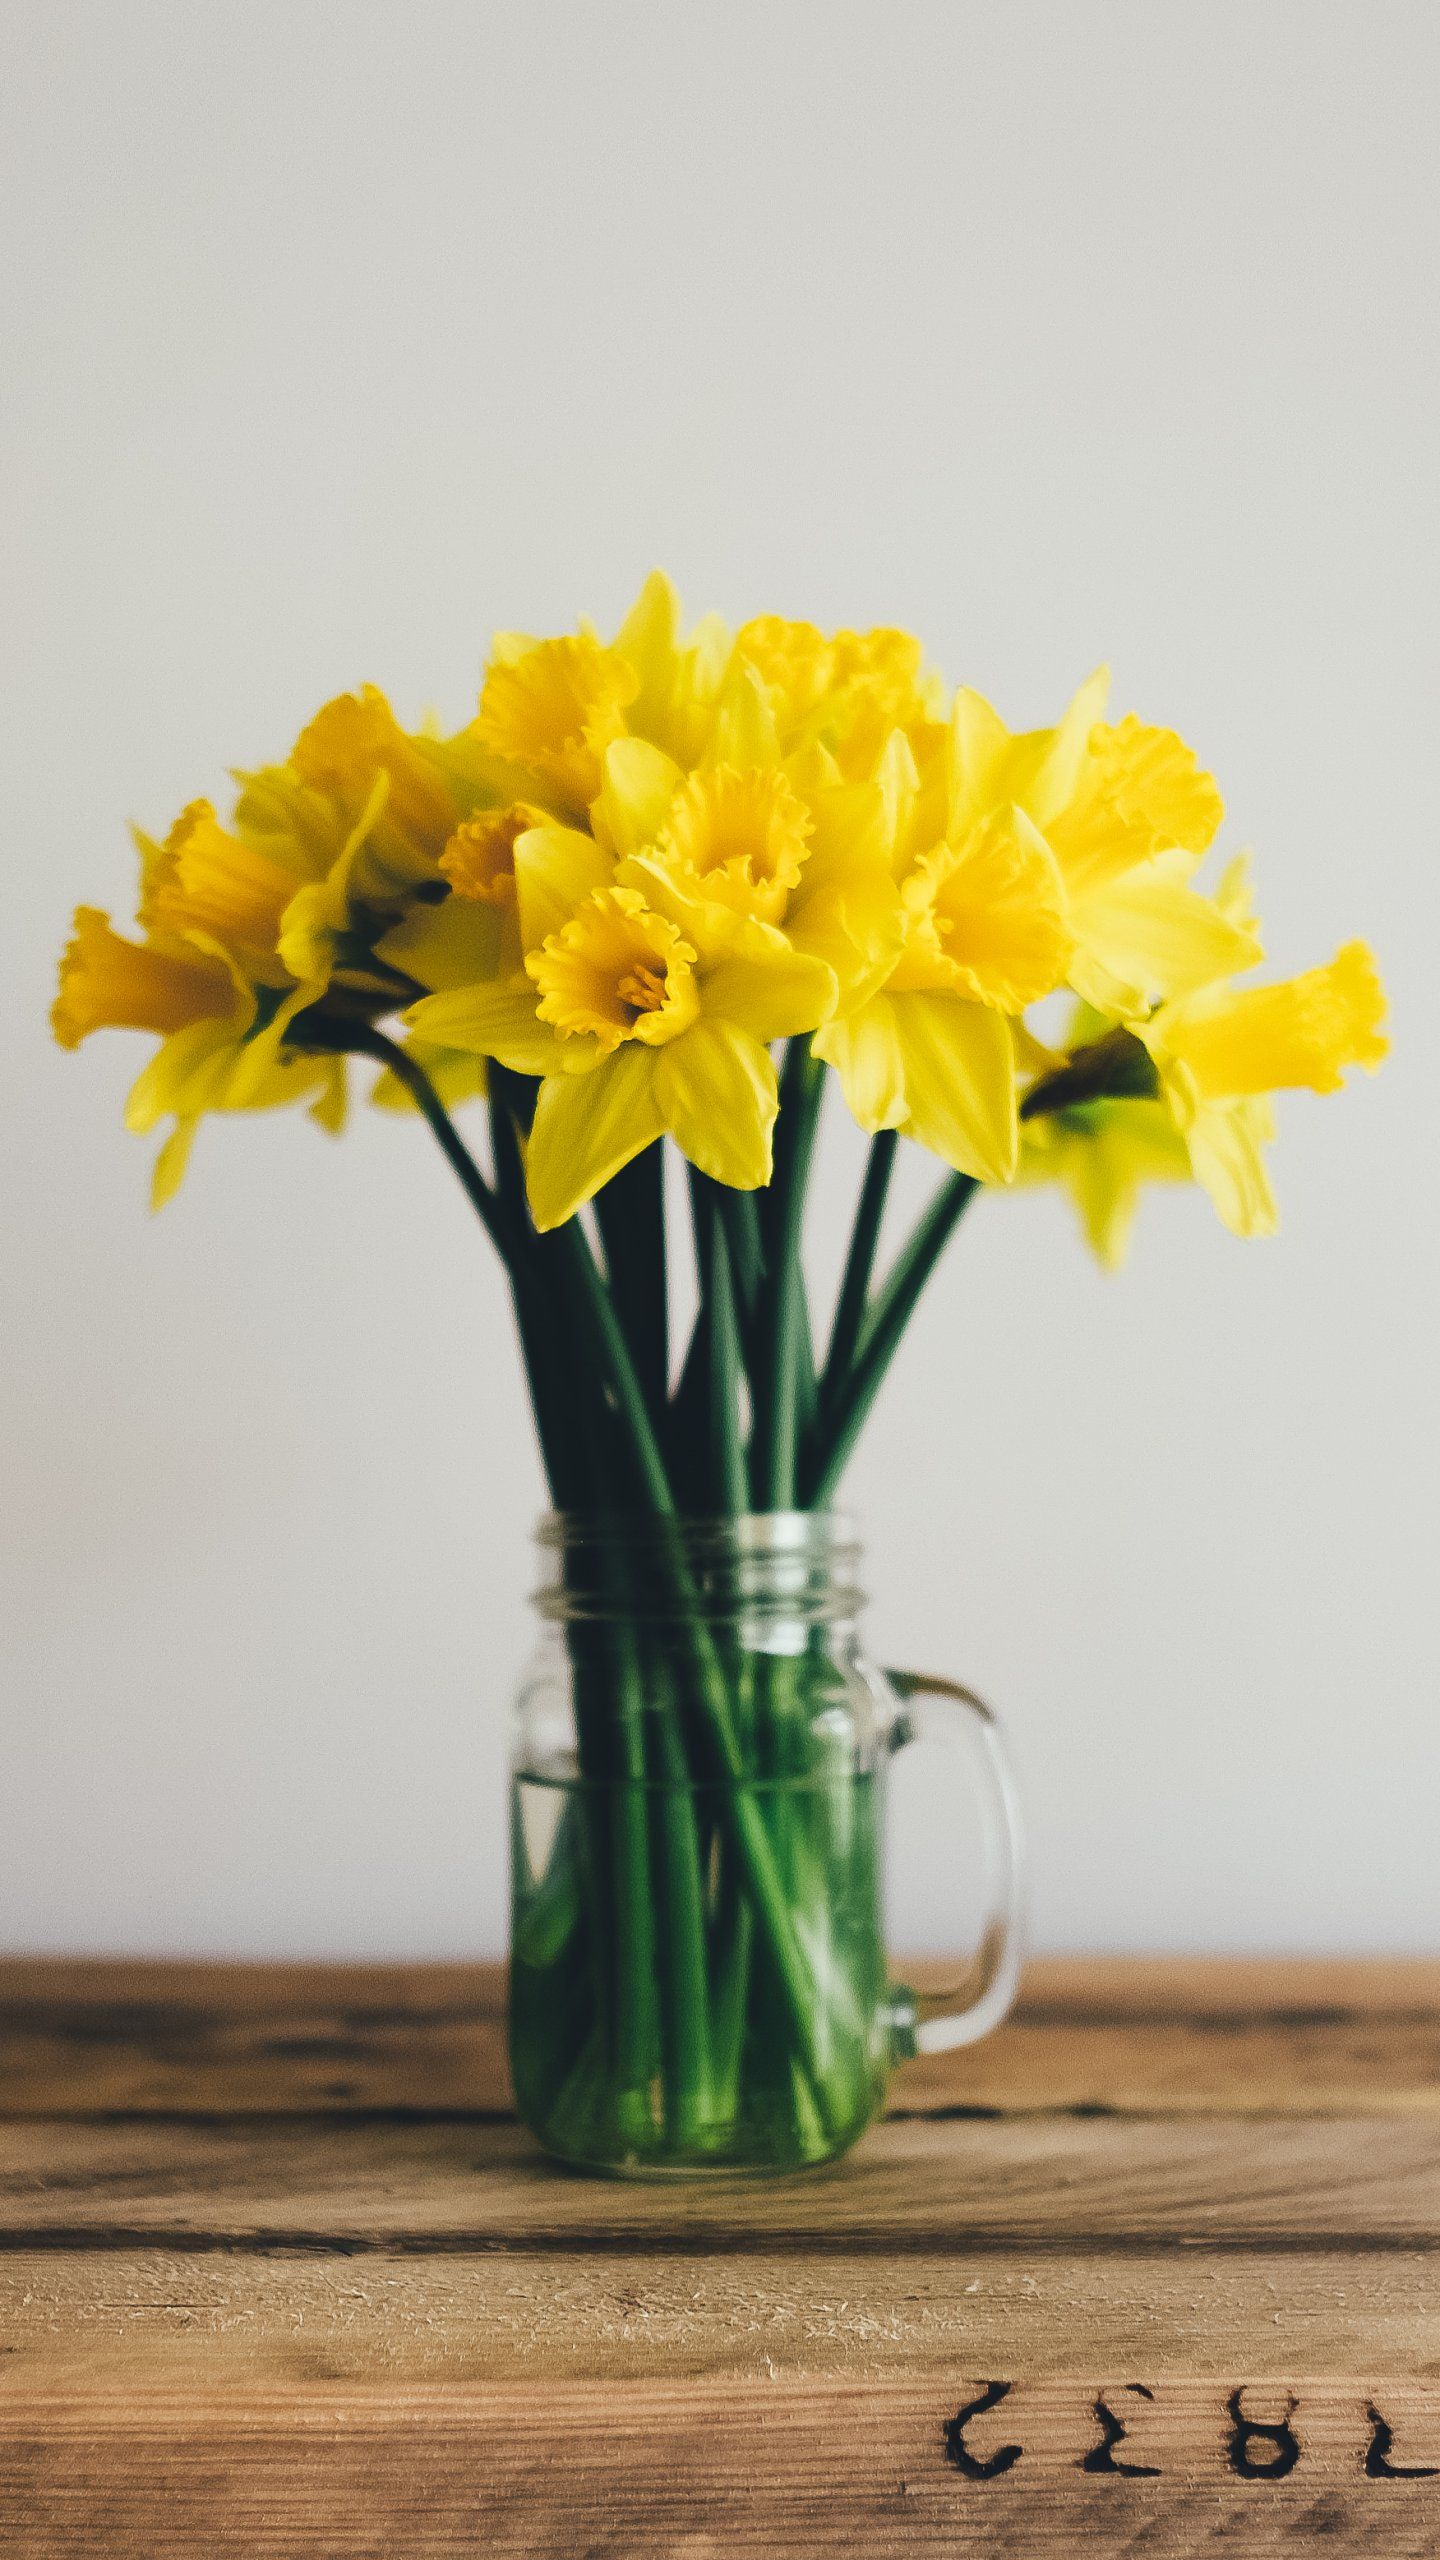 Daffodils Wallpaper, Android & Desktop Background. Flower arrangements diy, Daffodils, Flower wallpaper